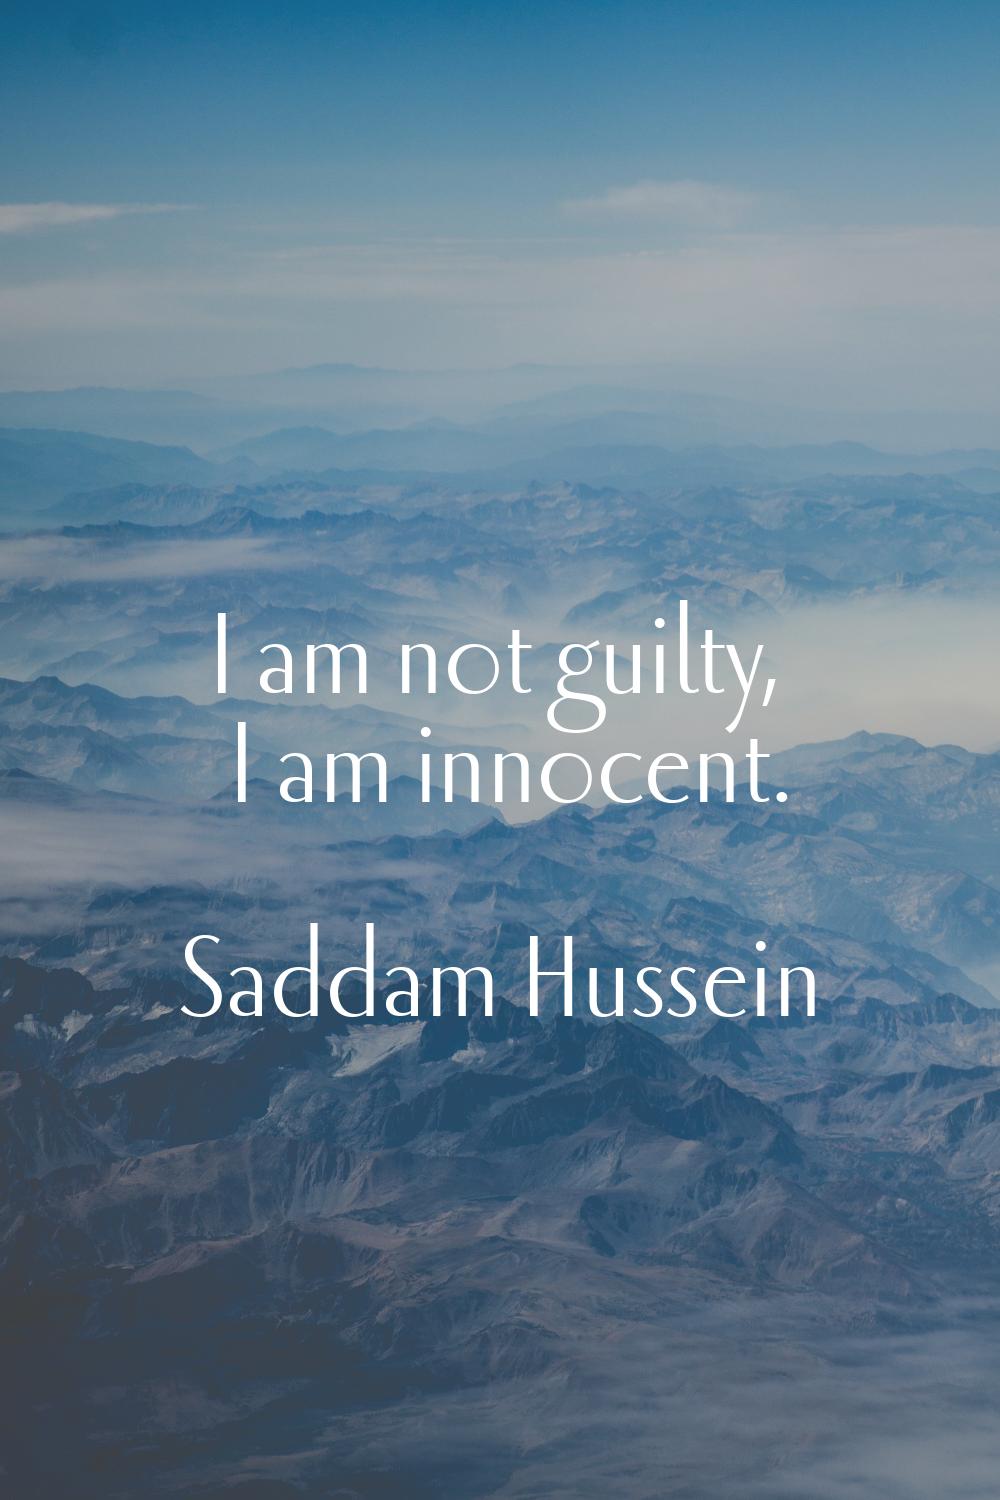 I am not guilty, I am innocent.